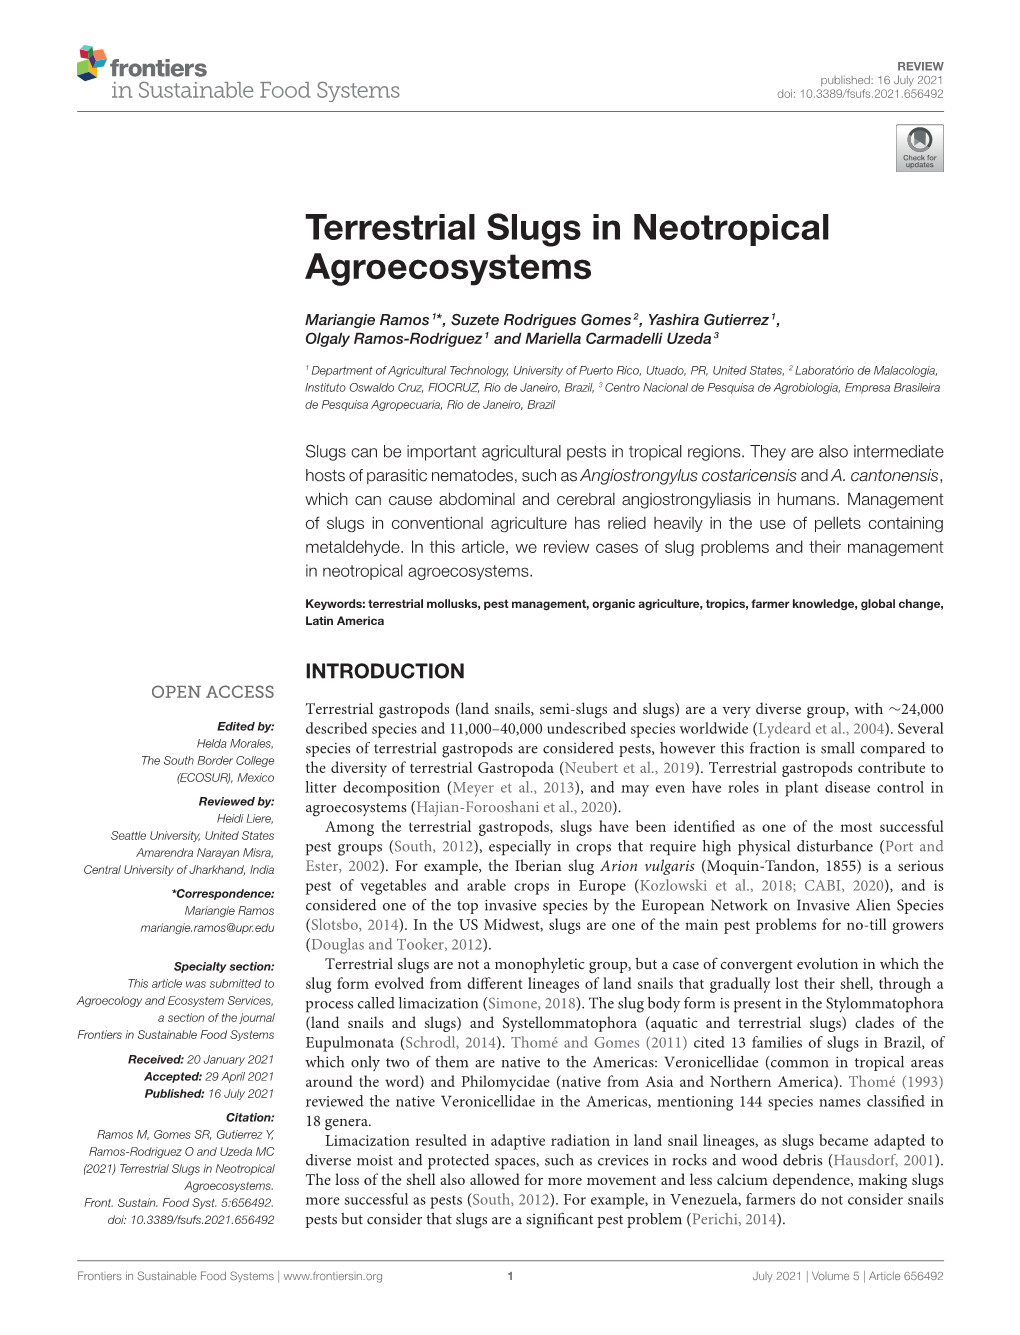 Terrestrial Slugs in Neotropical Agroecosystems